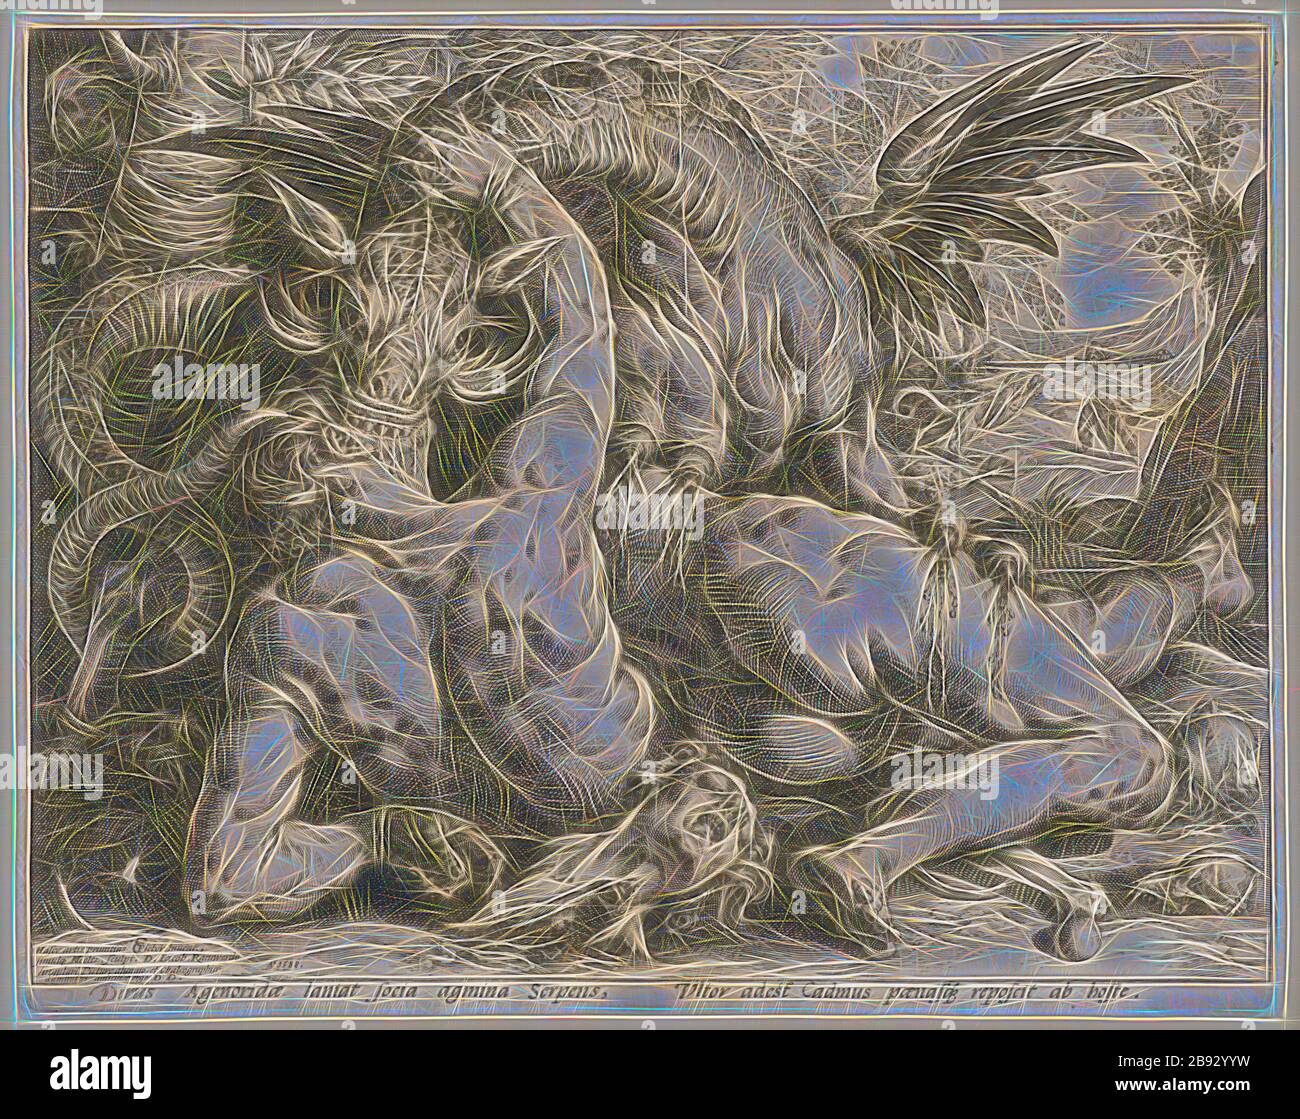 The Dragon Kills the Cadmus's Companions, 1588, Copperplate, Plate: 25.4 x 32.1 cm |, Leaf: 25.8 x 32.5 cm, U. l., inscribed: Hasce artis primitias CC [lig.] Pictor Inuent., simulq [ue] HGoltz., [HG lig.] Sculpt., D. Jacob., Raeuwerdo, singulari Pictur [a] e alumno, et chalcographiæ, admiratori amicitæ ergo D. D ., r., Dated: A ° 1588, inscribed under the image field: Dirus Agenoridæ laniat socia agmina serpens, Vltor adest cadmus pœnasq [ue] reposcit ab hoste., Hendrick Goltzius, Stecher, Mühlbrecht 1558–1617 Haarlem, Cornelis Cornelisz. van Haarlem, Inventor, 1562–1638, Reimagined by Gibon, Stock Photo